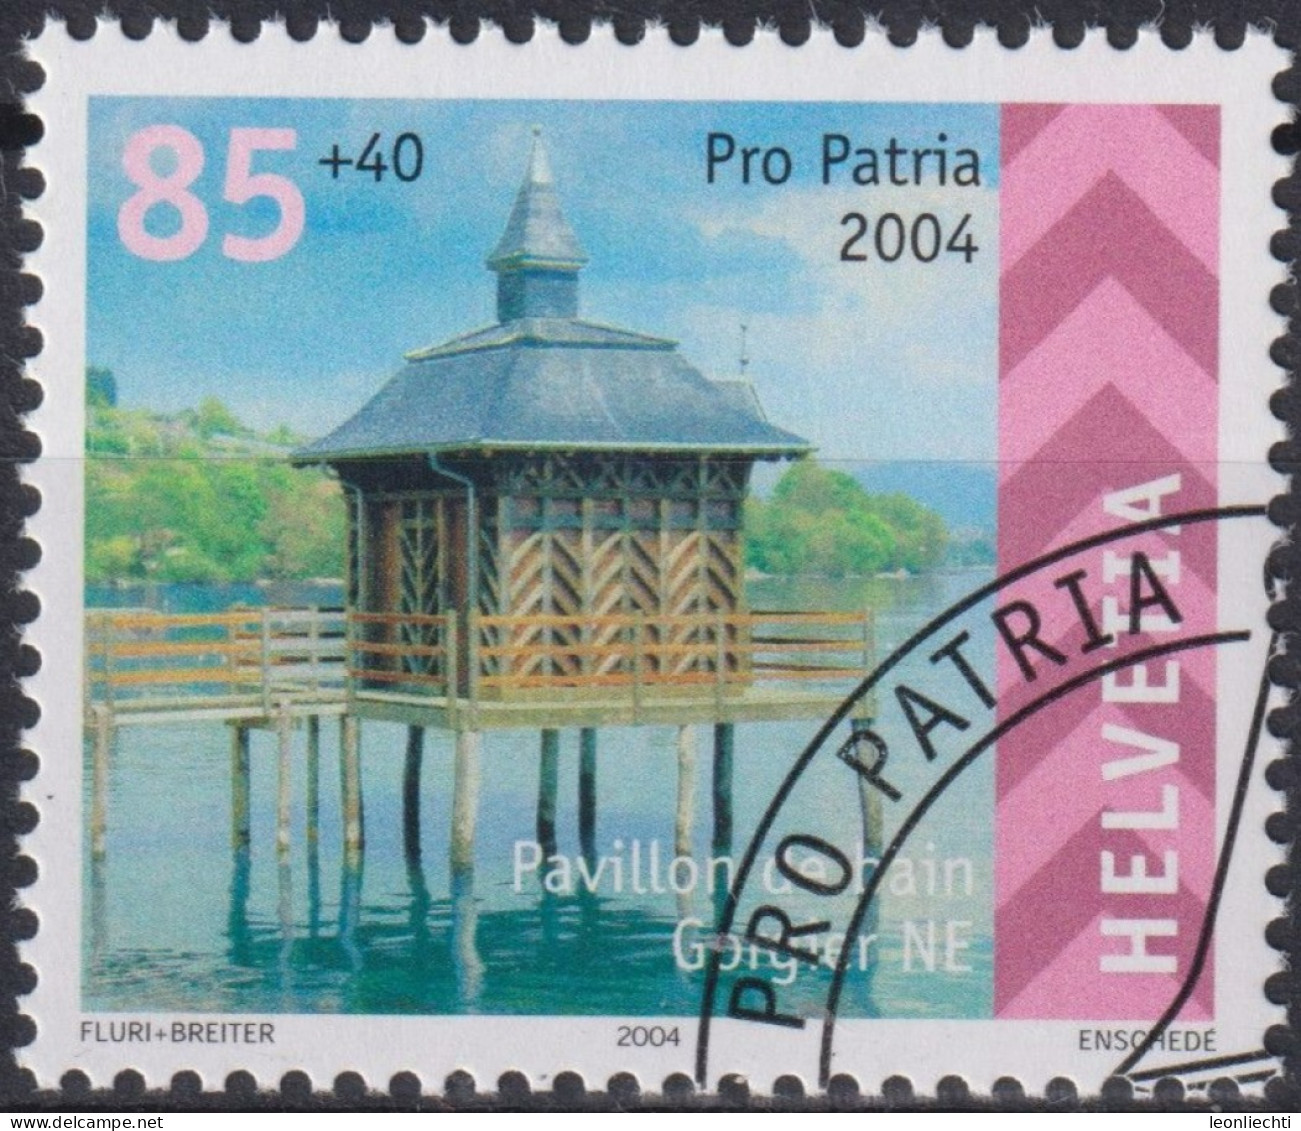 2004 Schweiz Pro Patria, Pavillon De Bain, Gorgier NE ⵙ Zum:CH B284, Mi:CH 1874, Yt:CH 1804 - Used Stamps